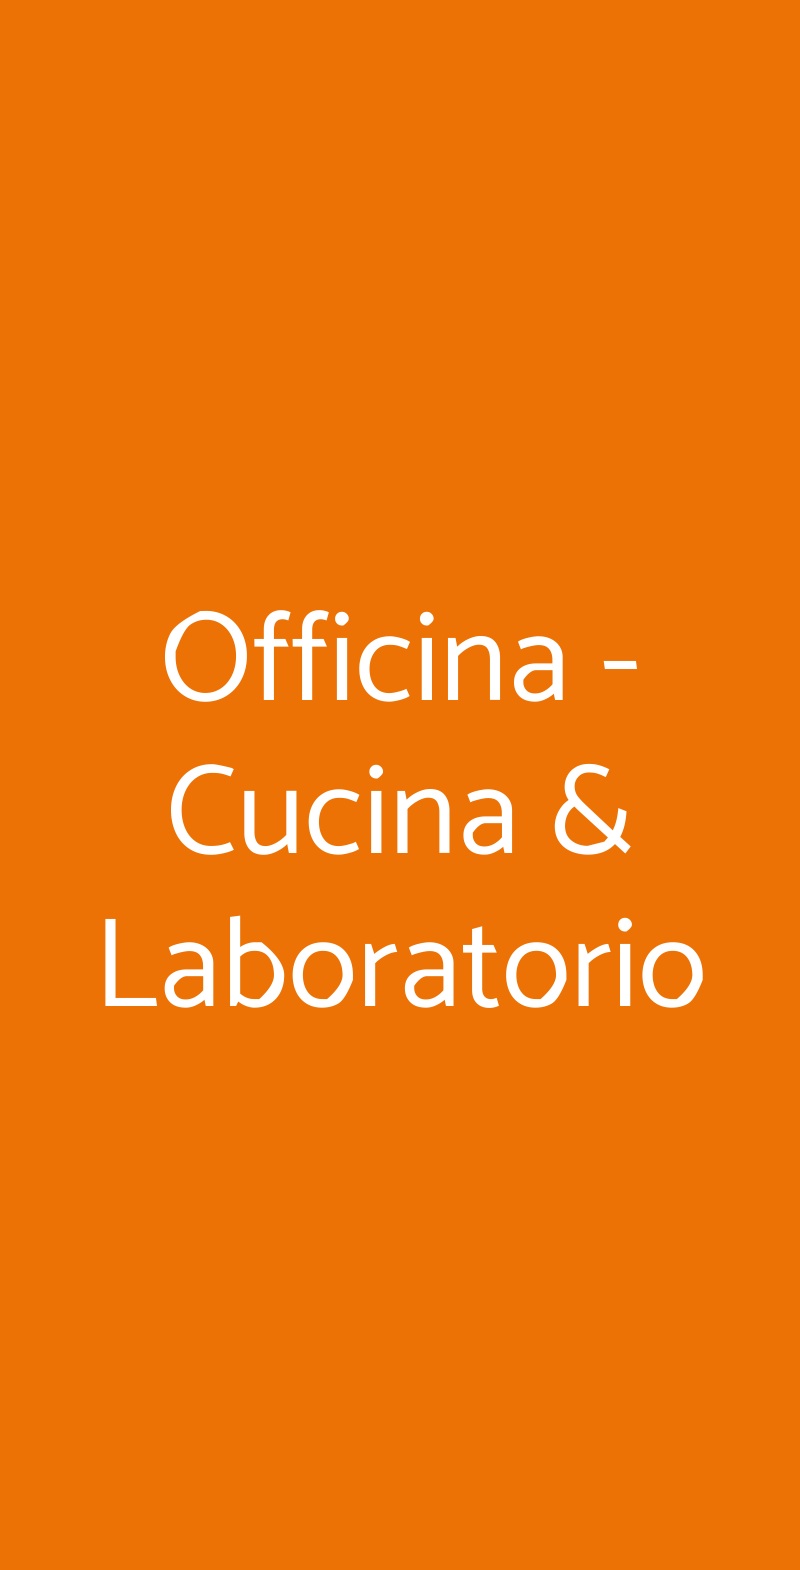 Officina - Cucina & Laboratorio Verona menù 1 pagina